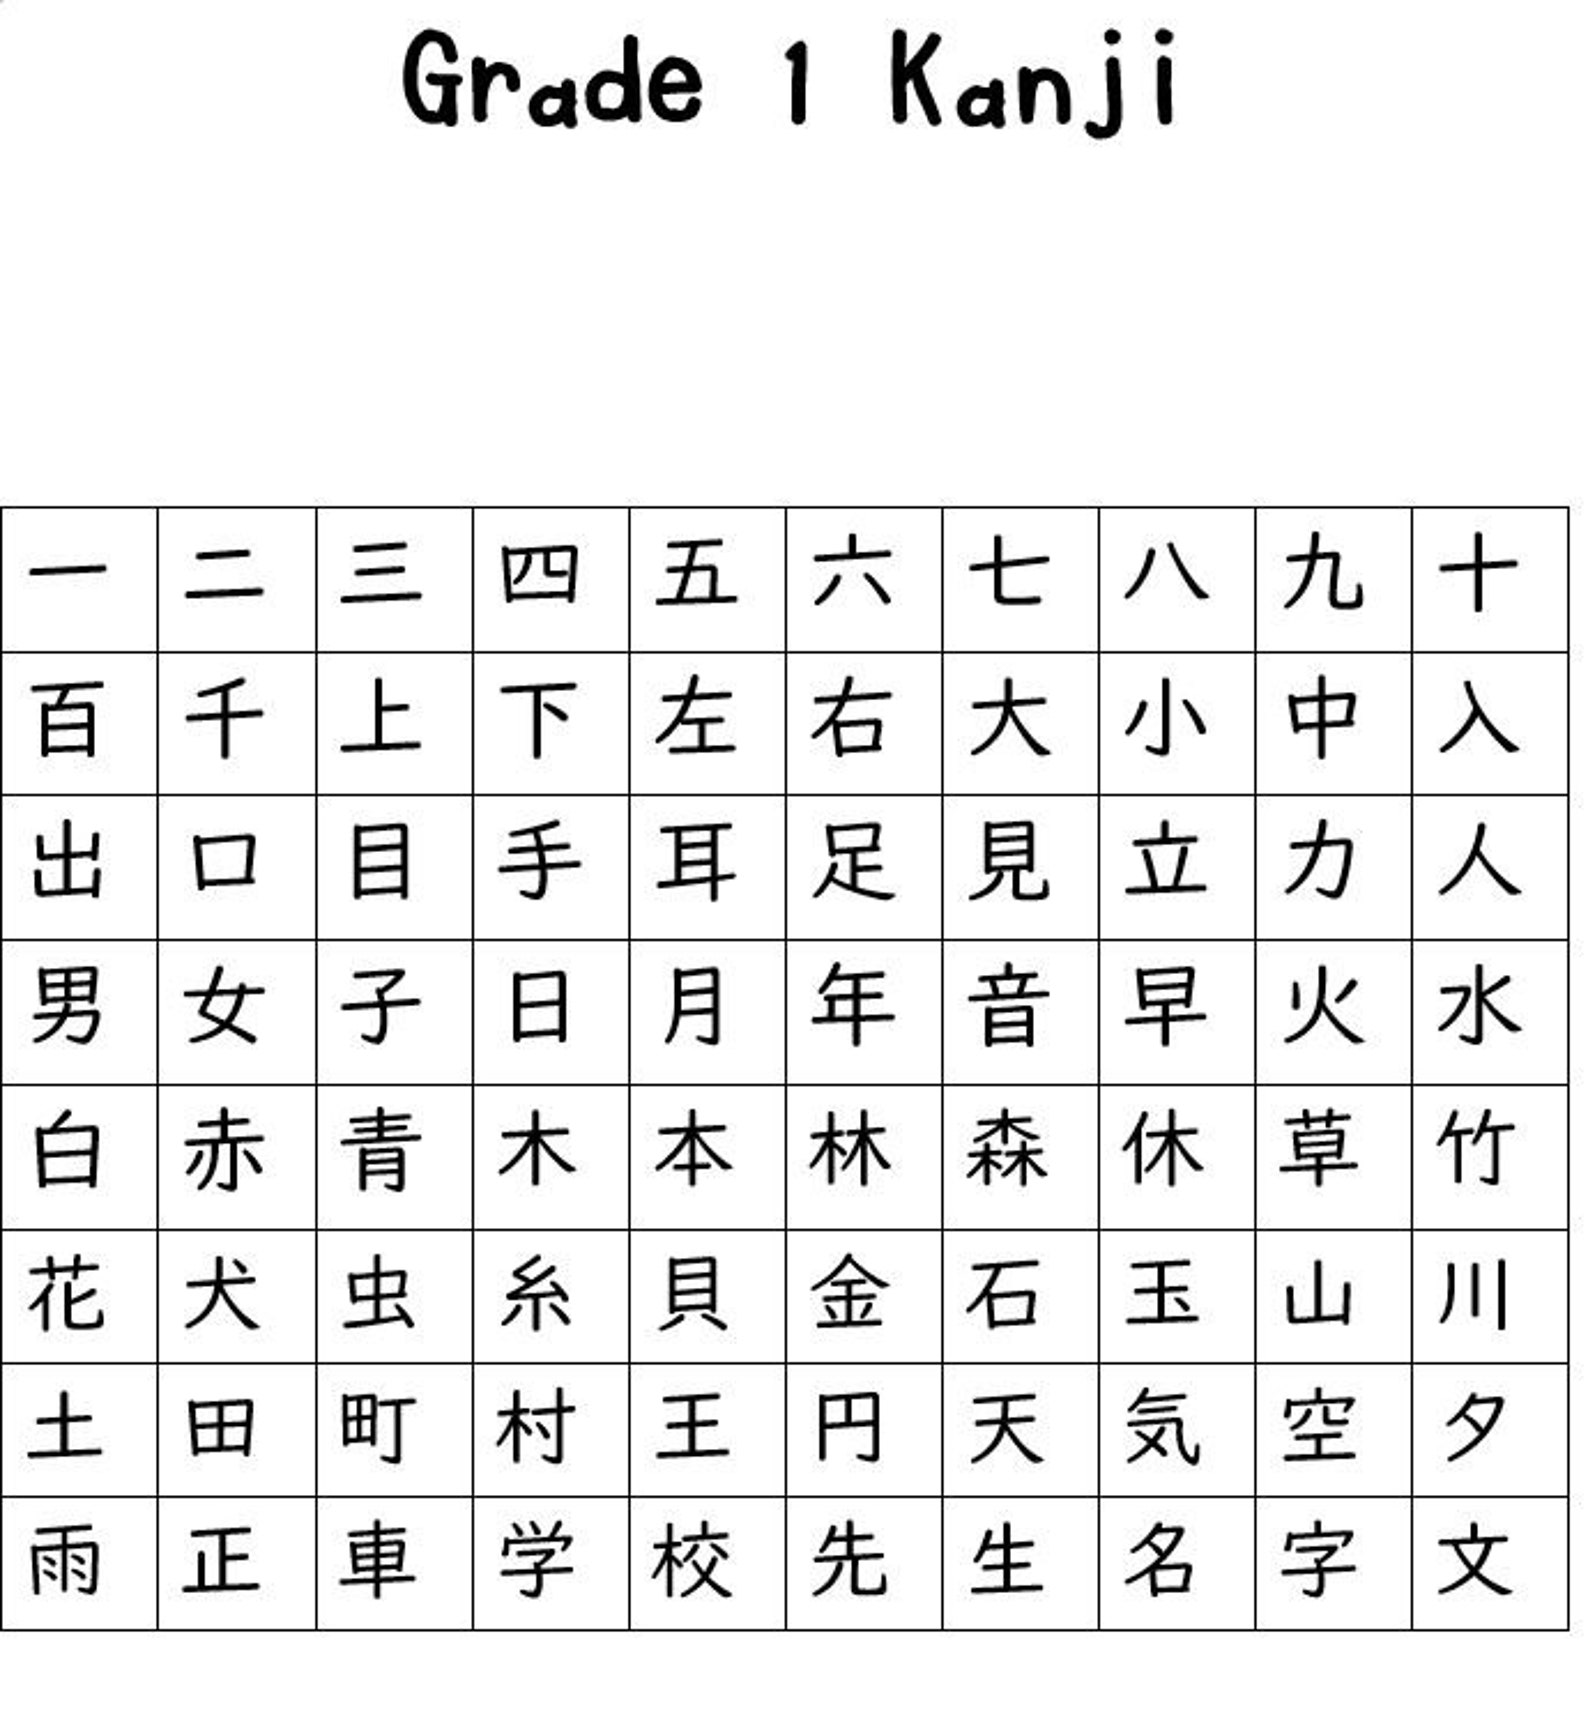 printable-japanese-grade-1-kanji-textbook-practice-sheets-etsy